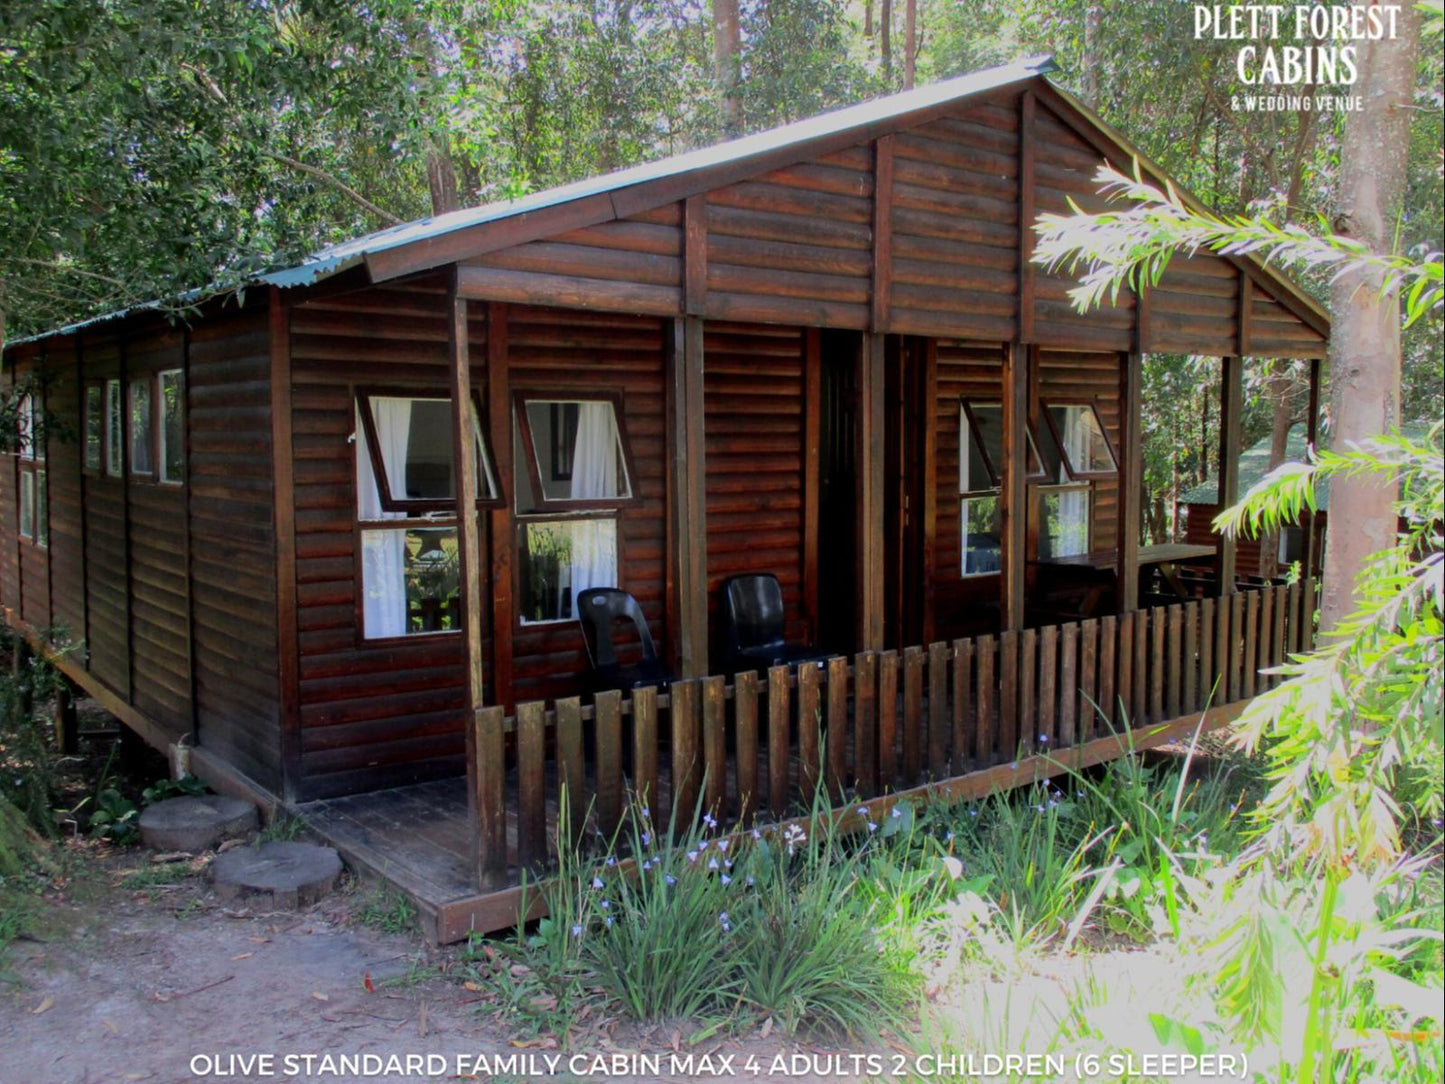 Olive Standard Family @ Plett Forest Cabins